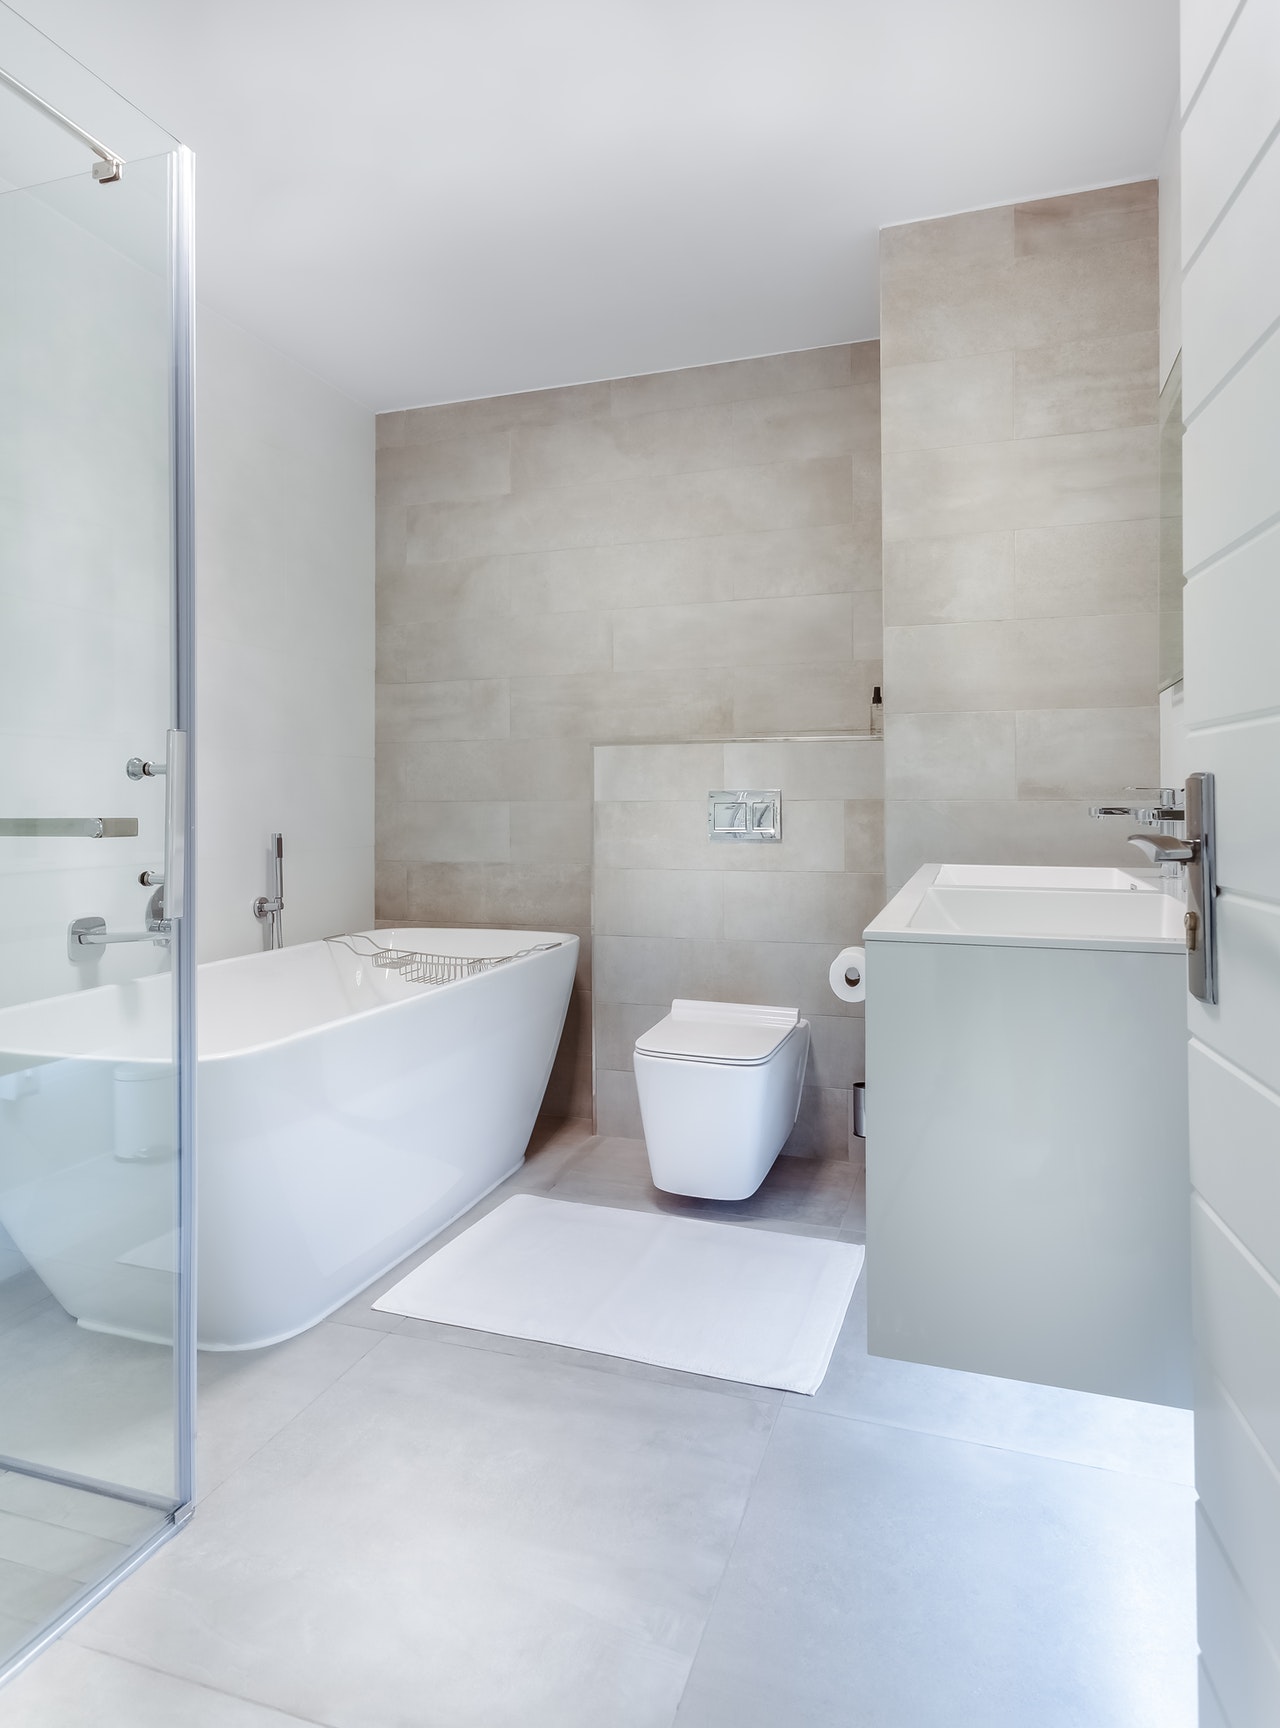 Bathroom renovation Hillingdon 